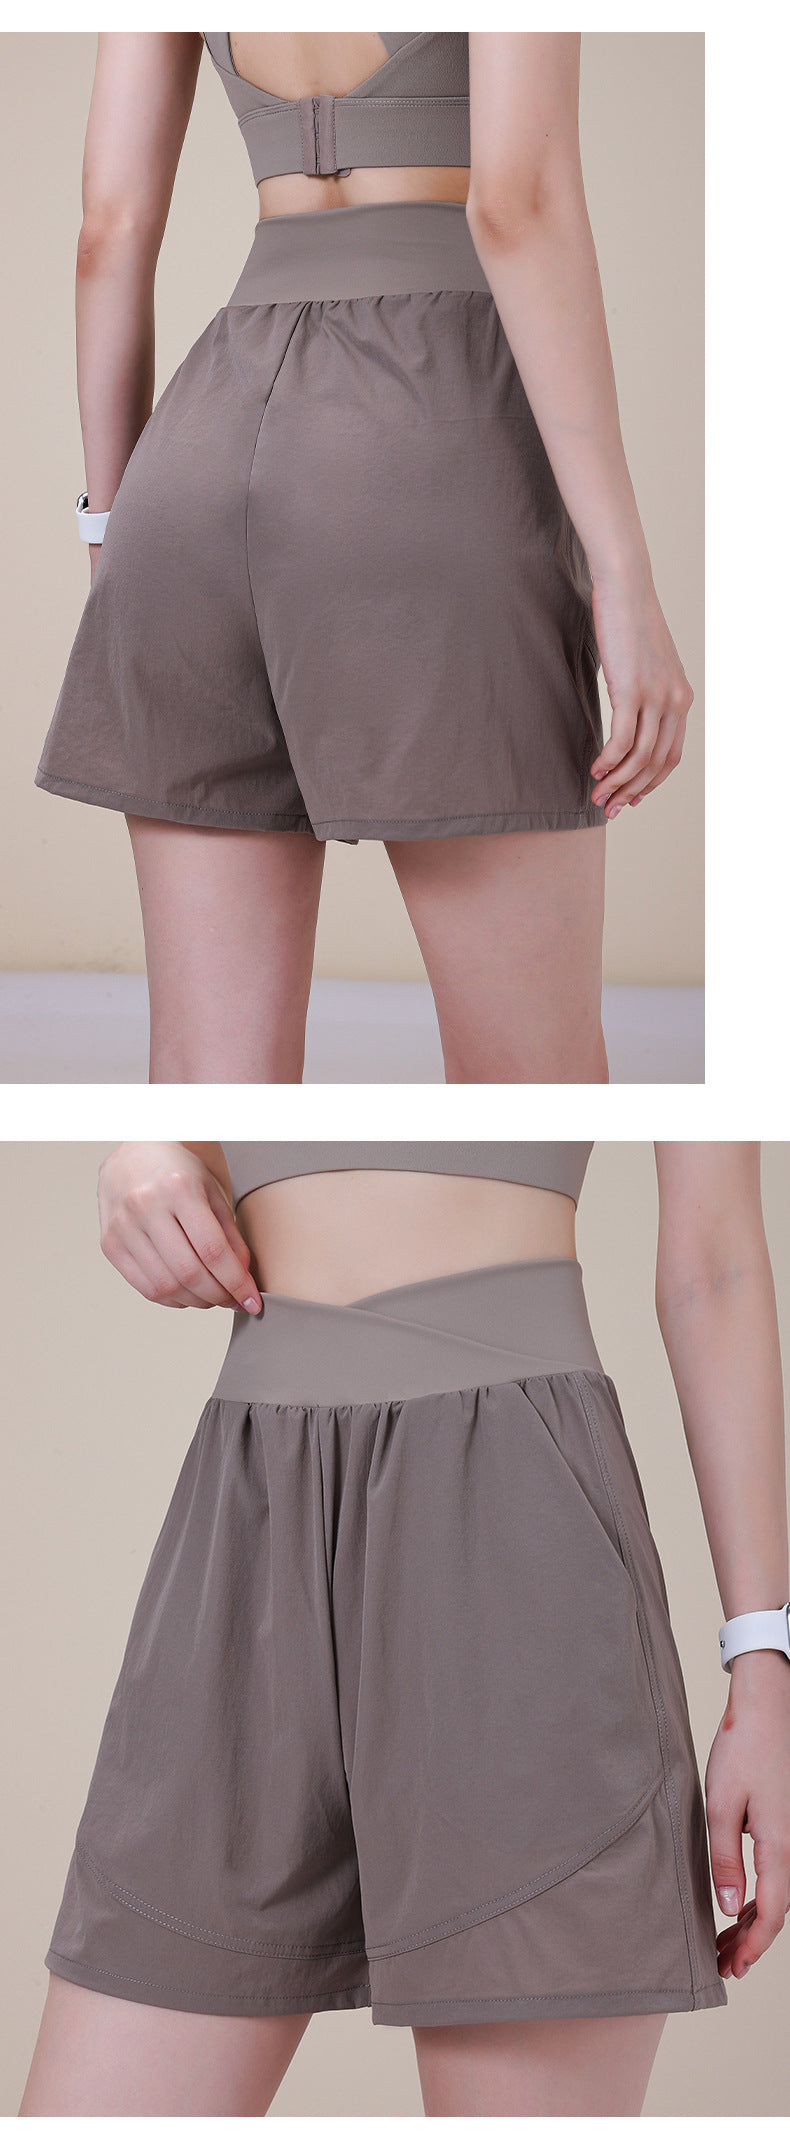 Summer new A-line trousers sports shorts women's belt pocket cross V-shaped belly slimming running fitness yoga pants